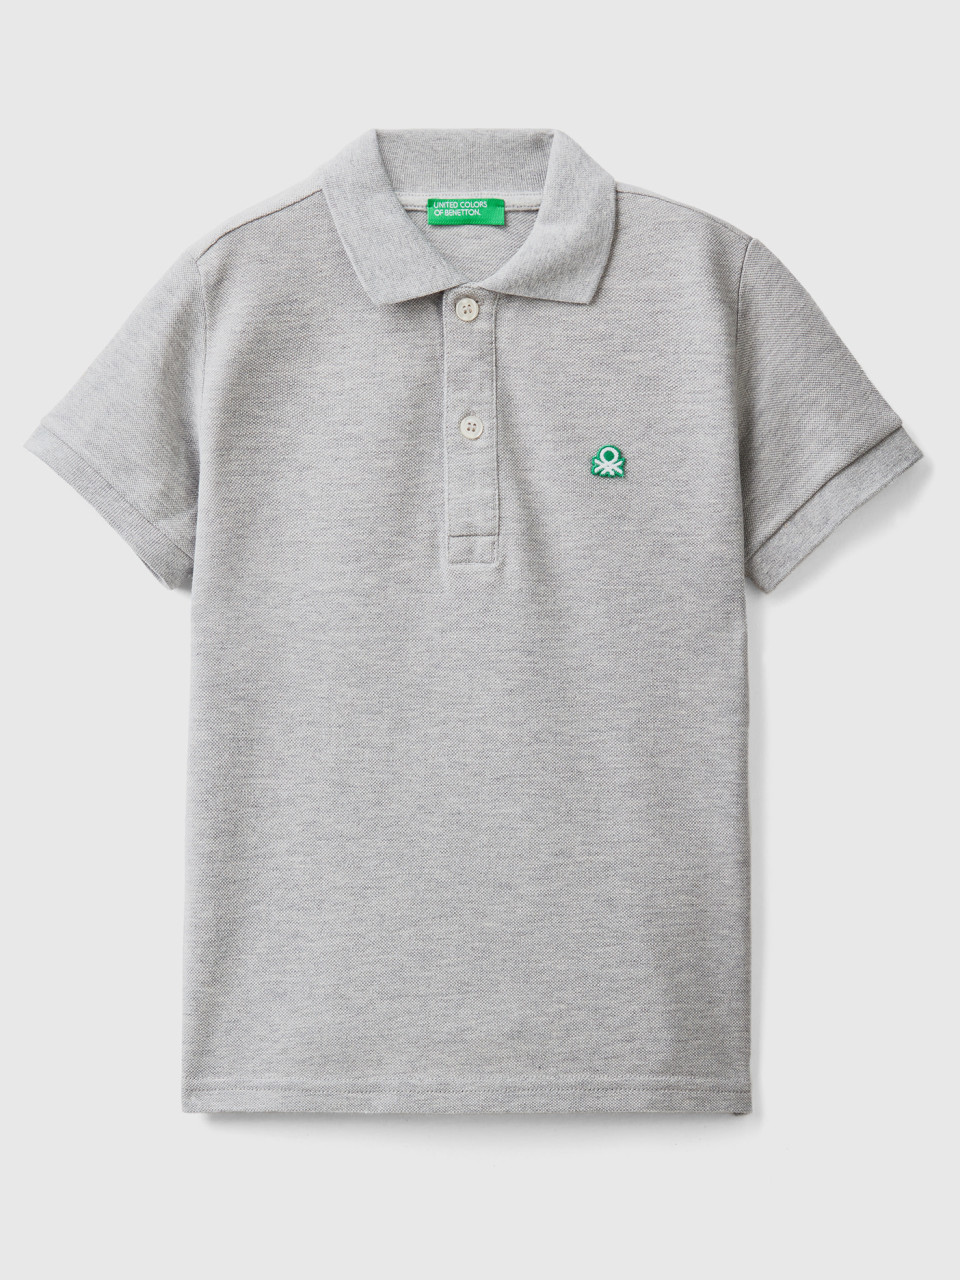 Benetton, Short Sleeve Polo In Organic Cotton, Light Gray, Kids